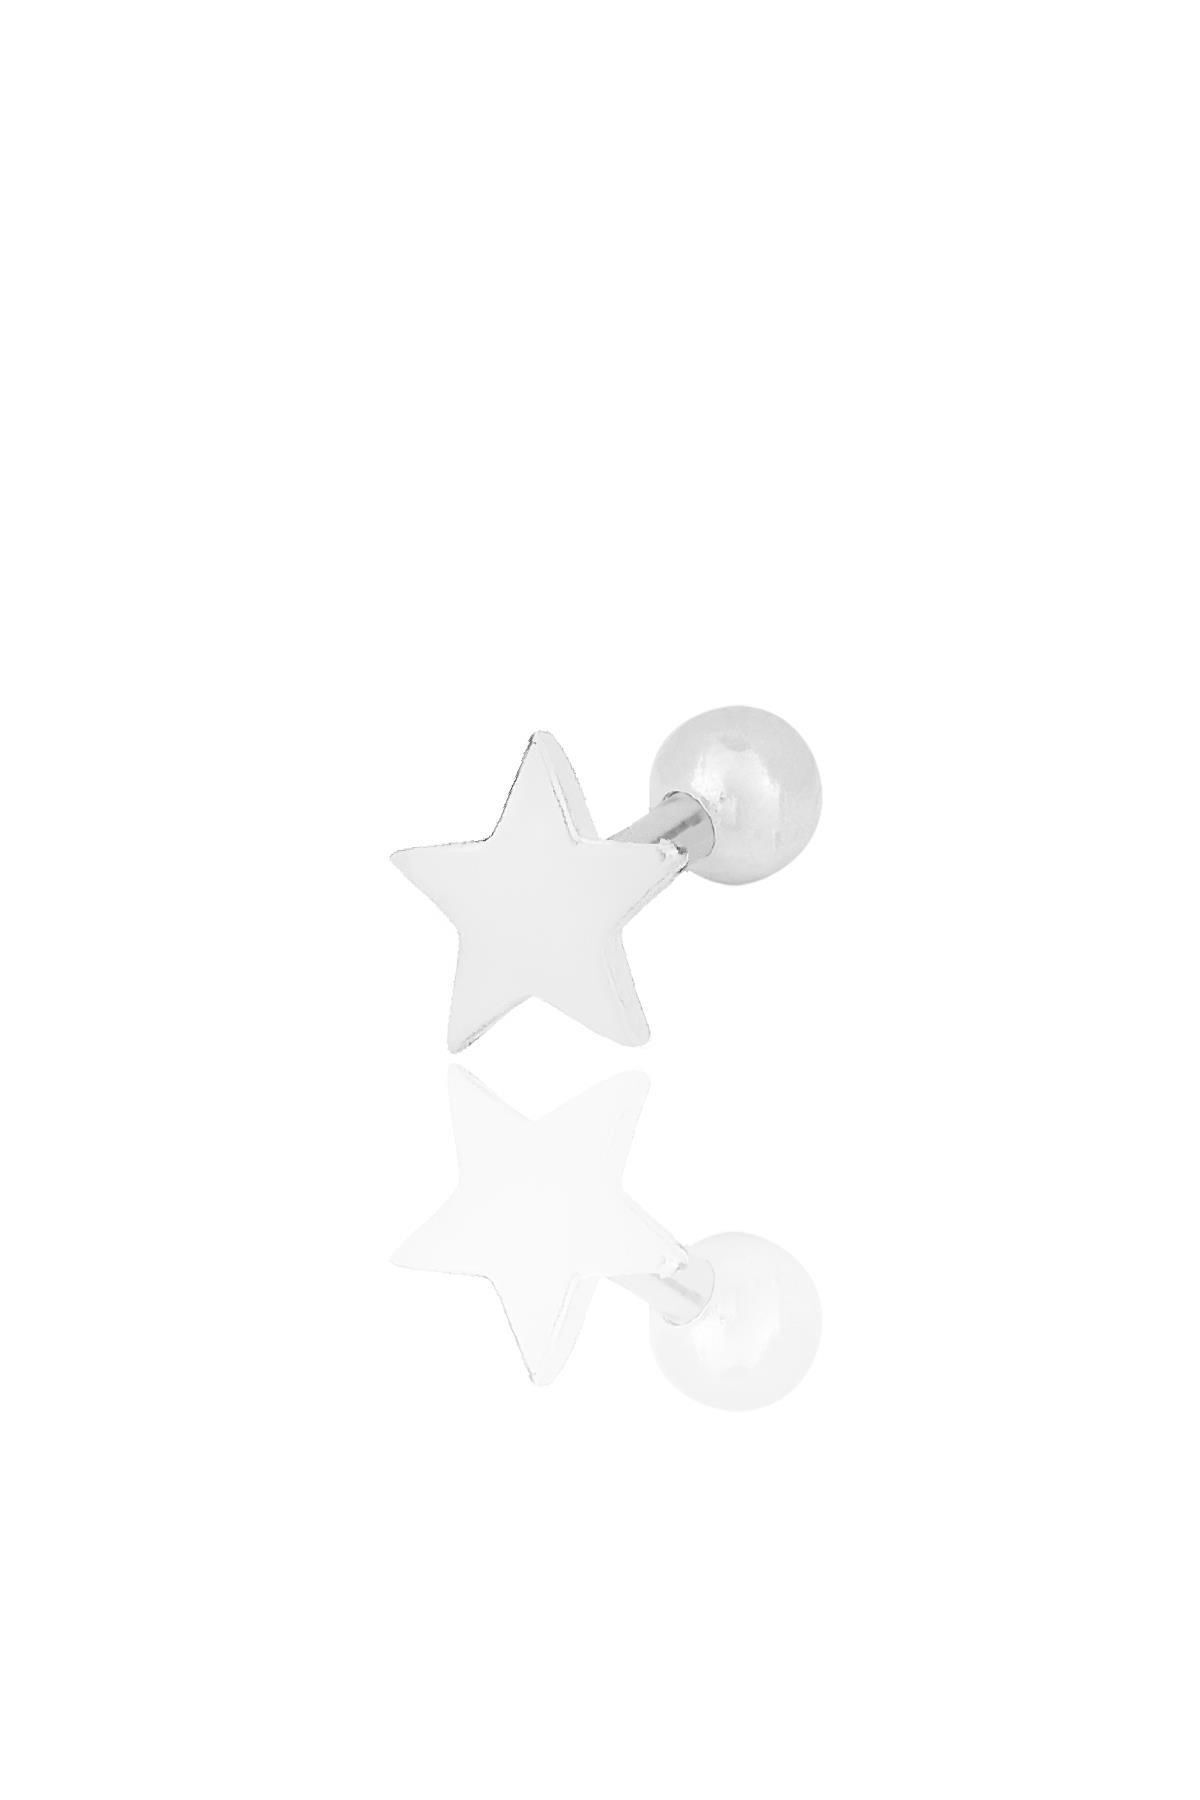 Söğütlü Silver Gümüş rodyumlu yıldız modeli Tragus helix Piercing küpe SGTL12318RODAJ